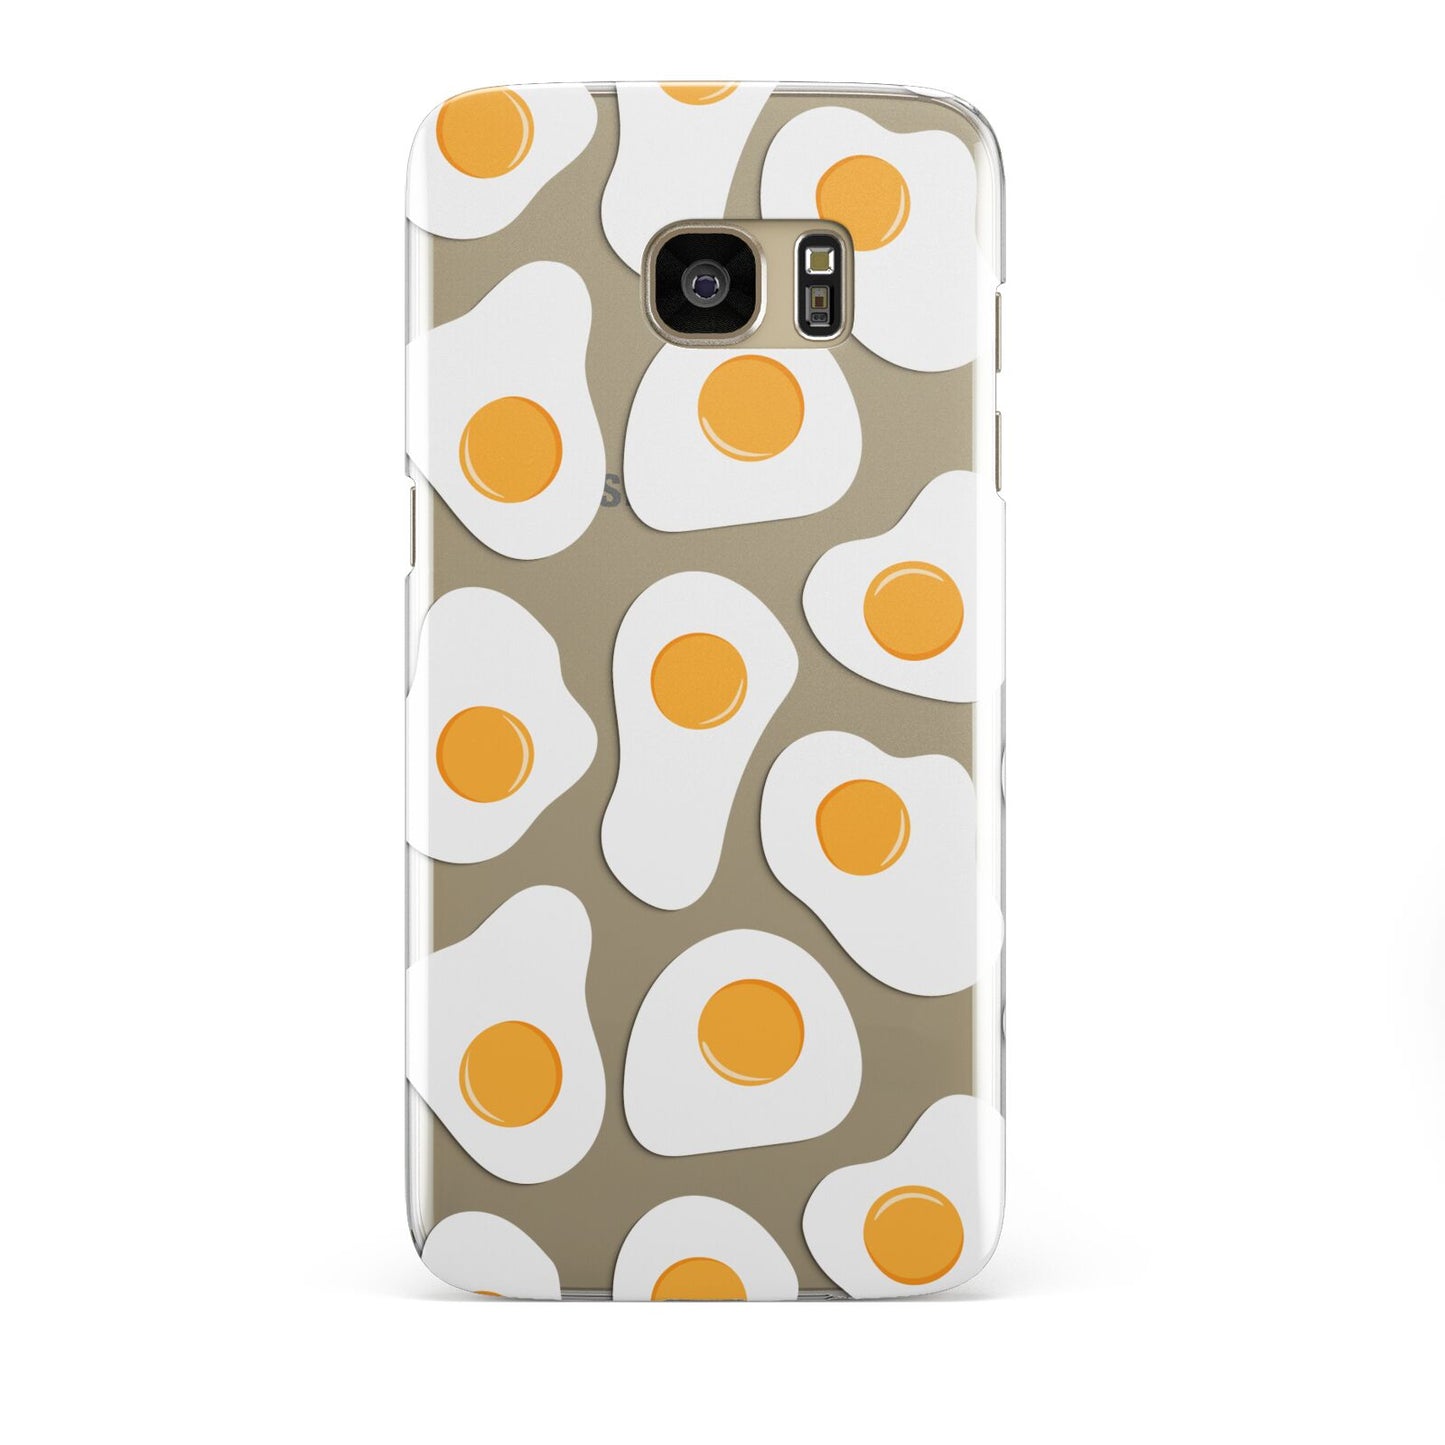 Fried Egg Samsung Galaxy S7 Edge Case